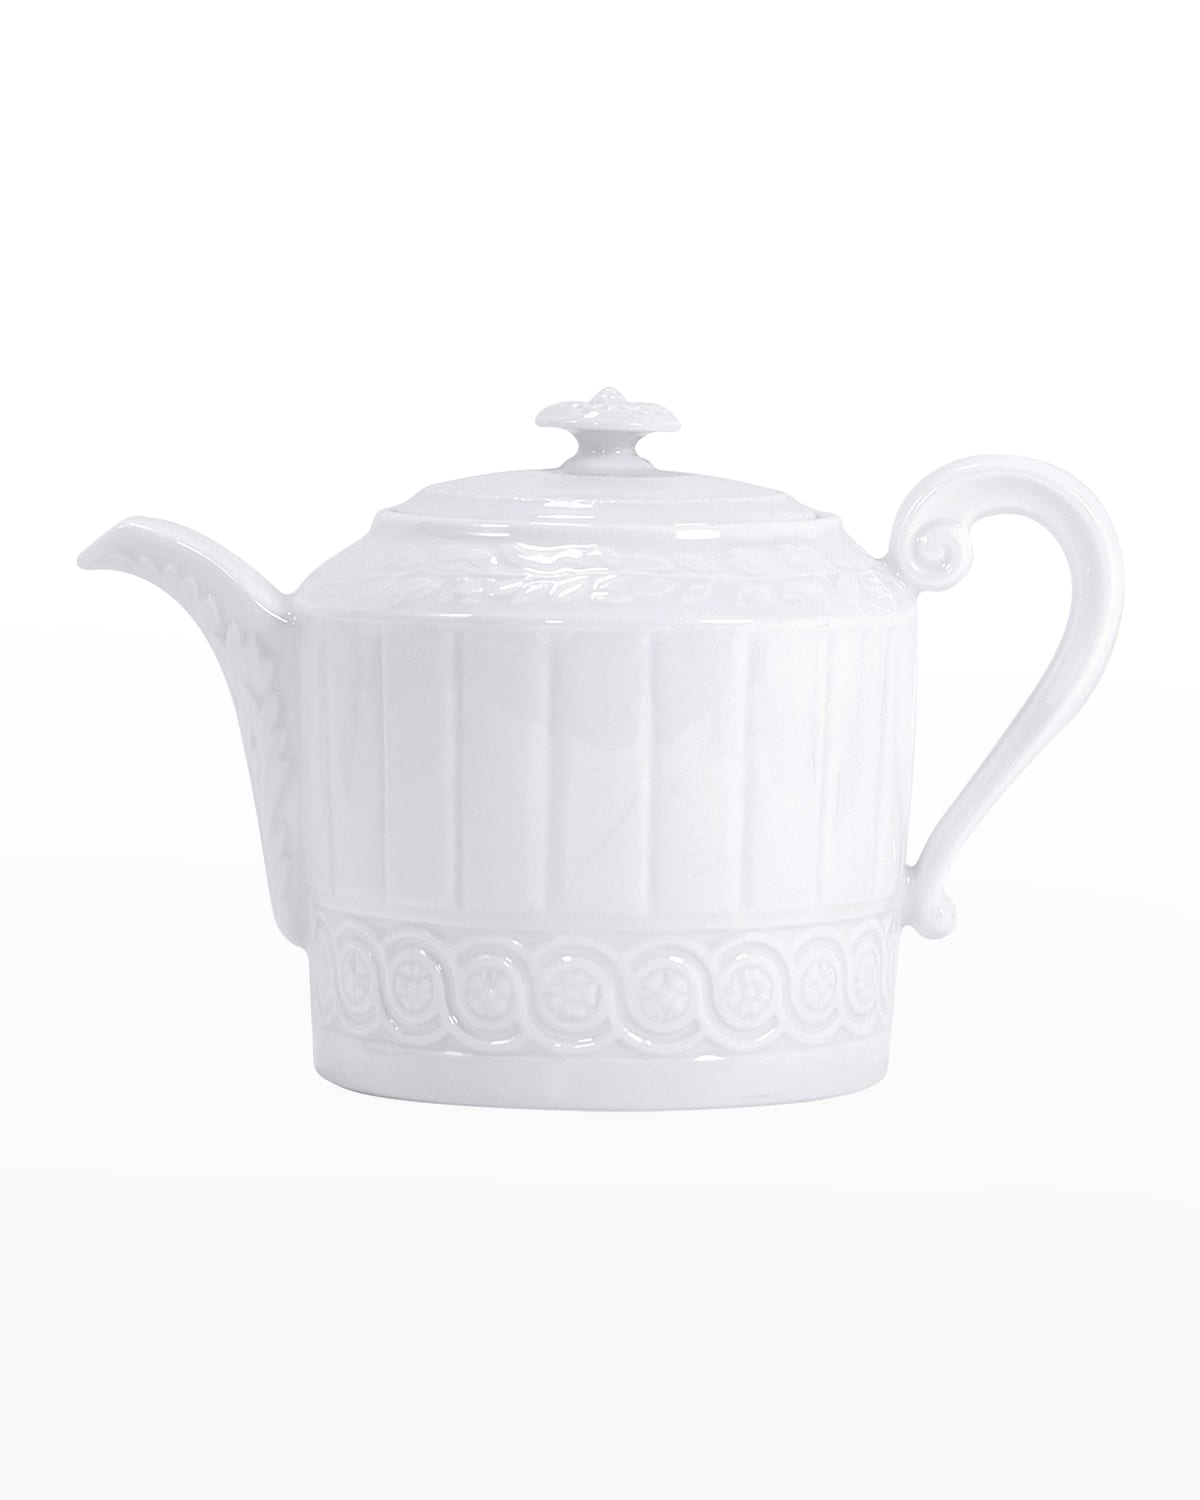 Bernardaud Louvre Teapot In White